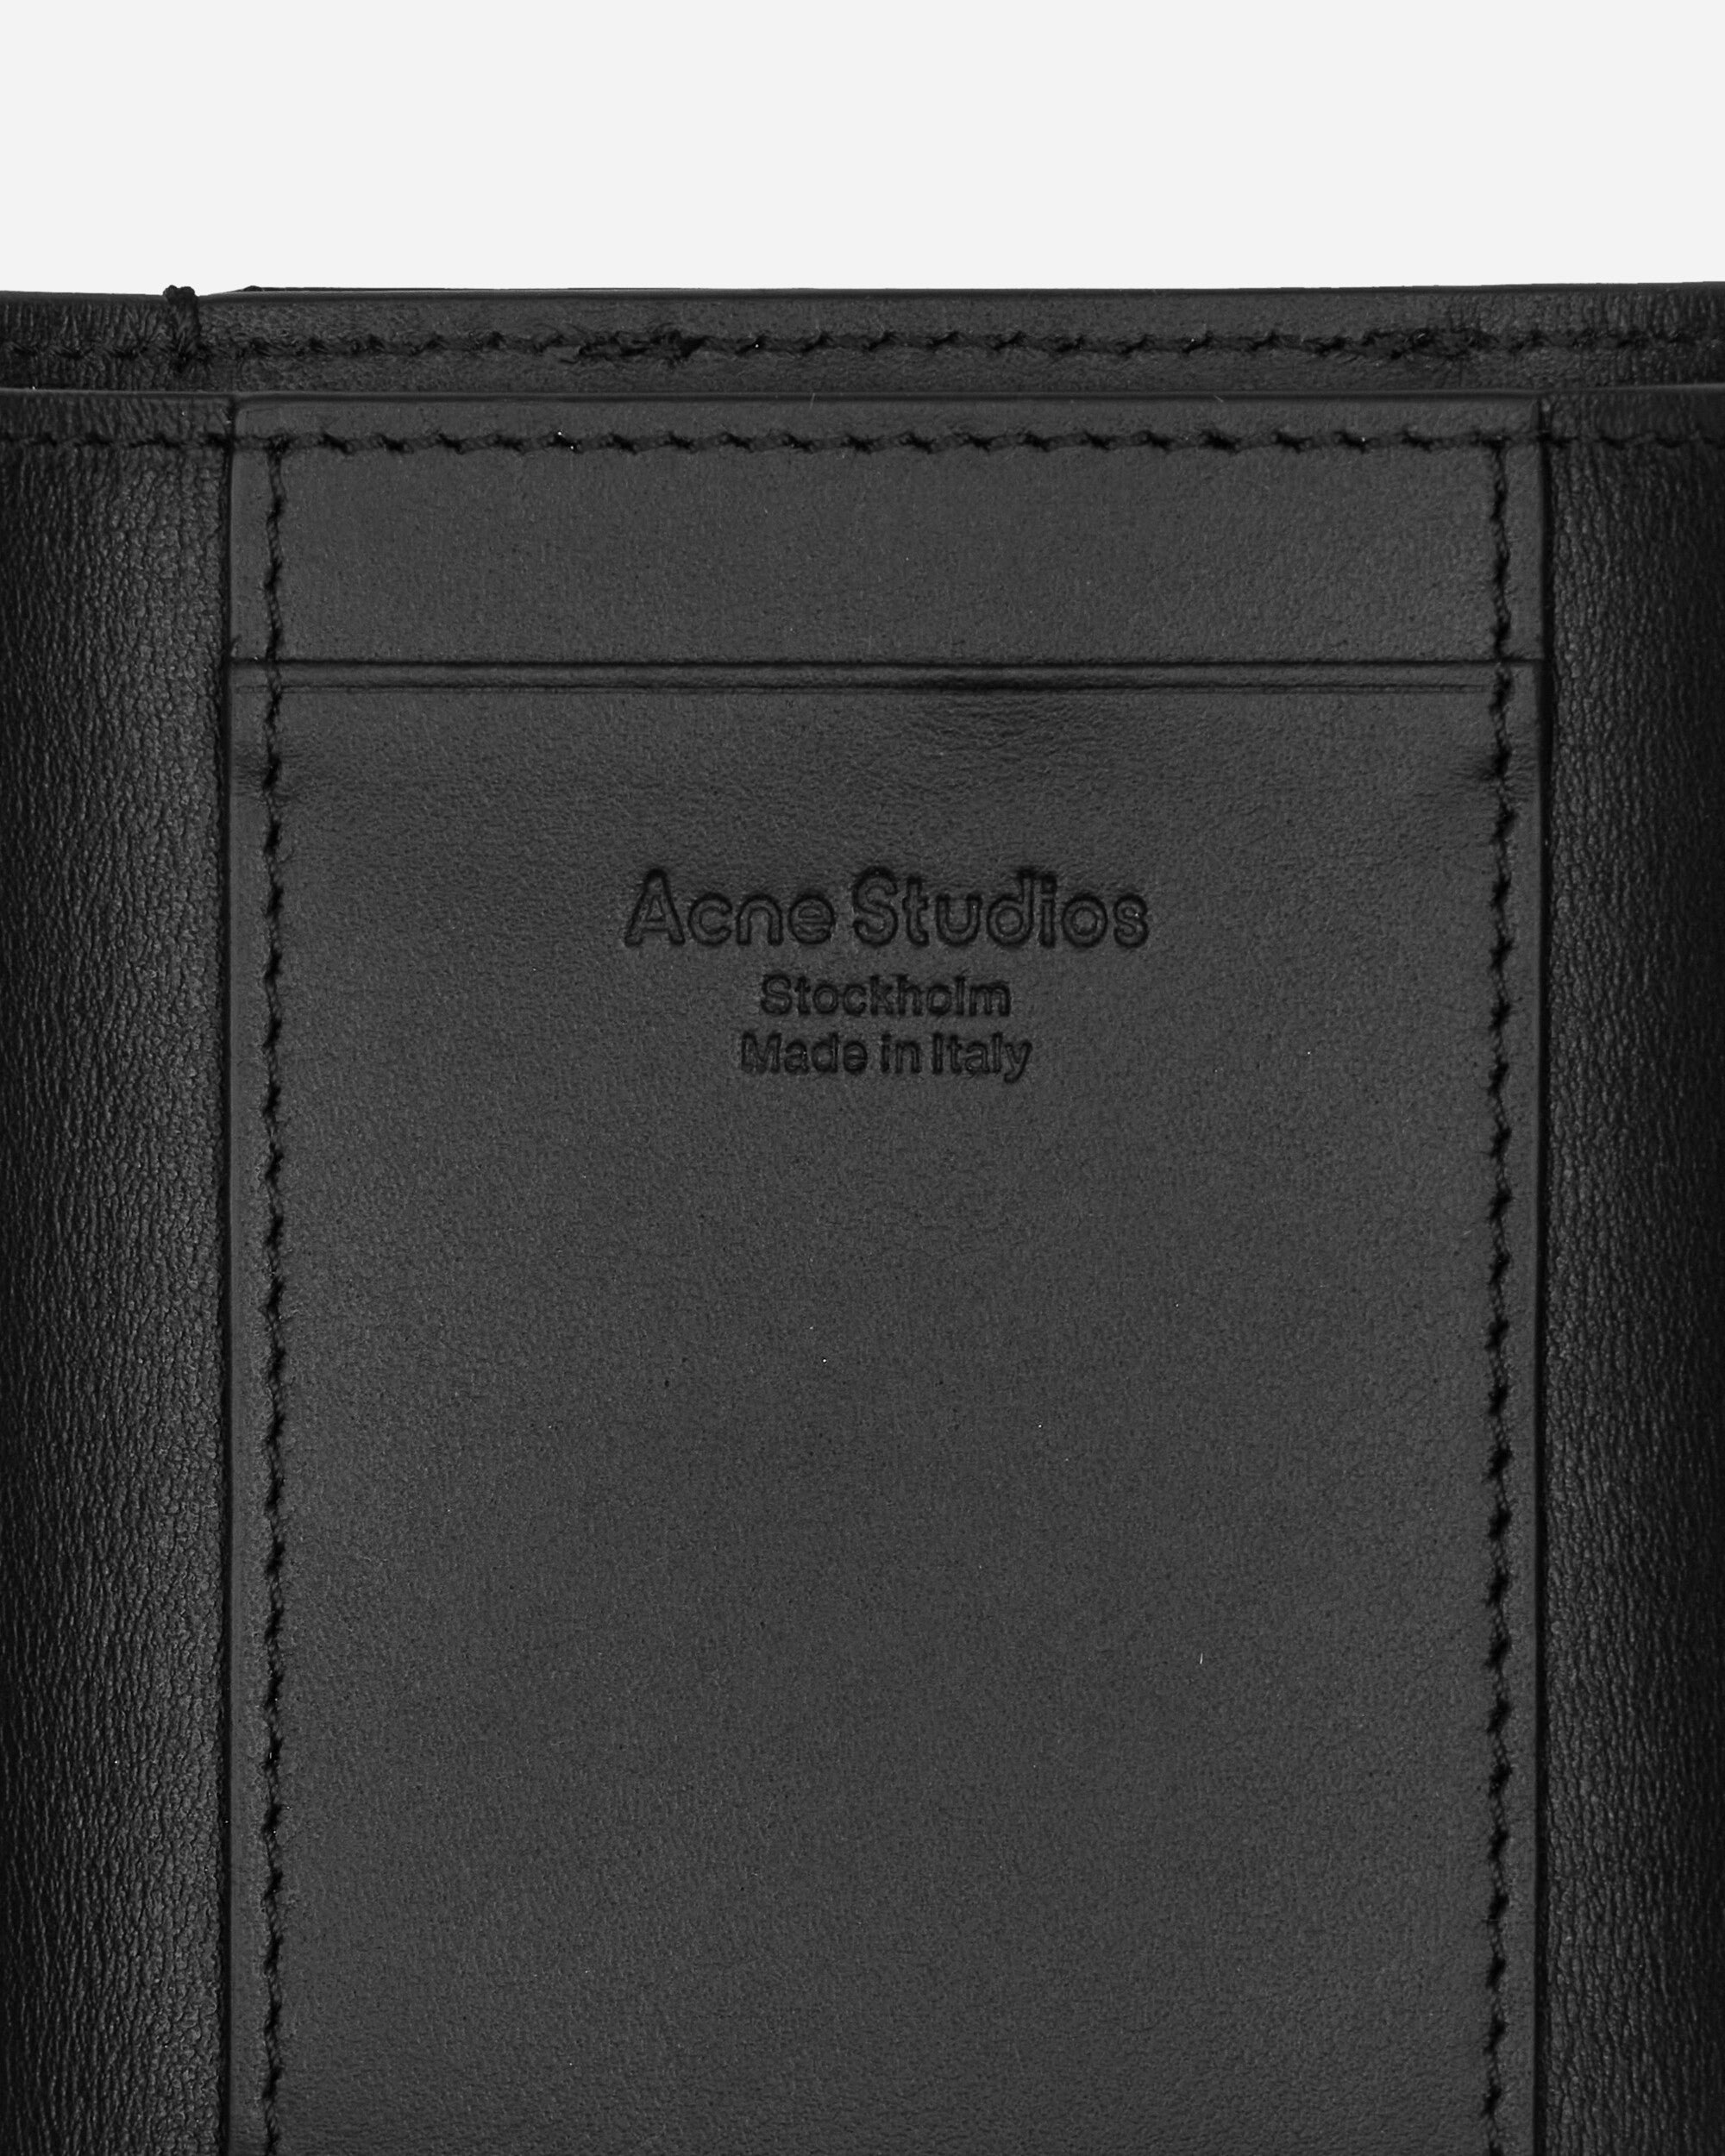 Acne Studios Wallet Black Wallets and Cardholders Wallets CG0221- 900